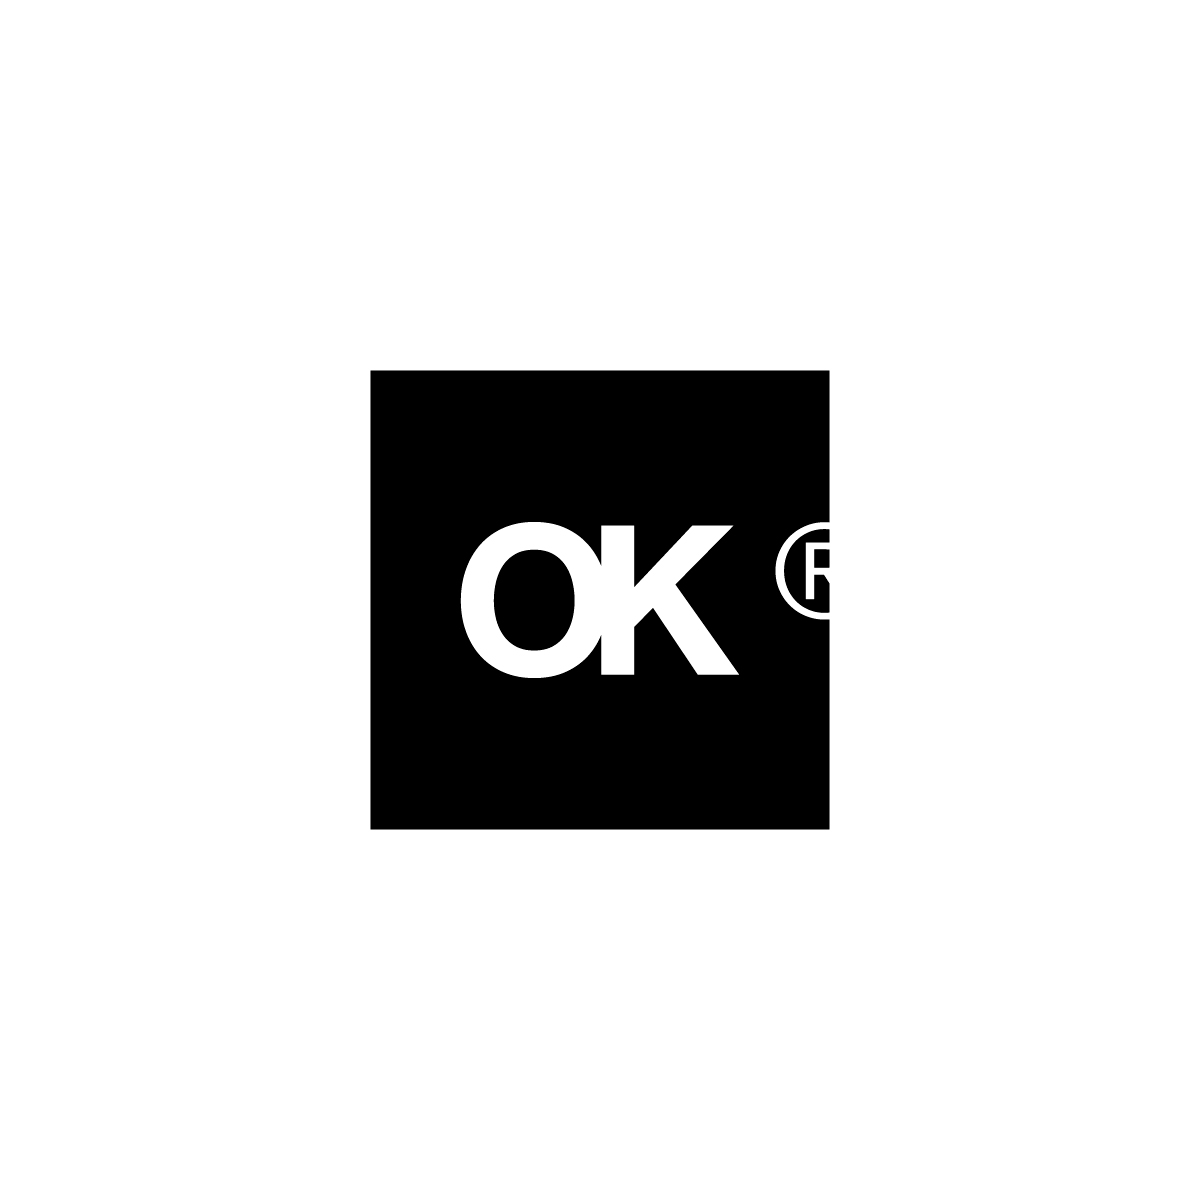 OK® [a design fort]